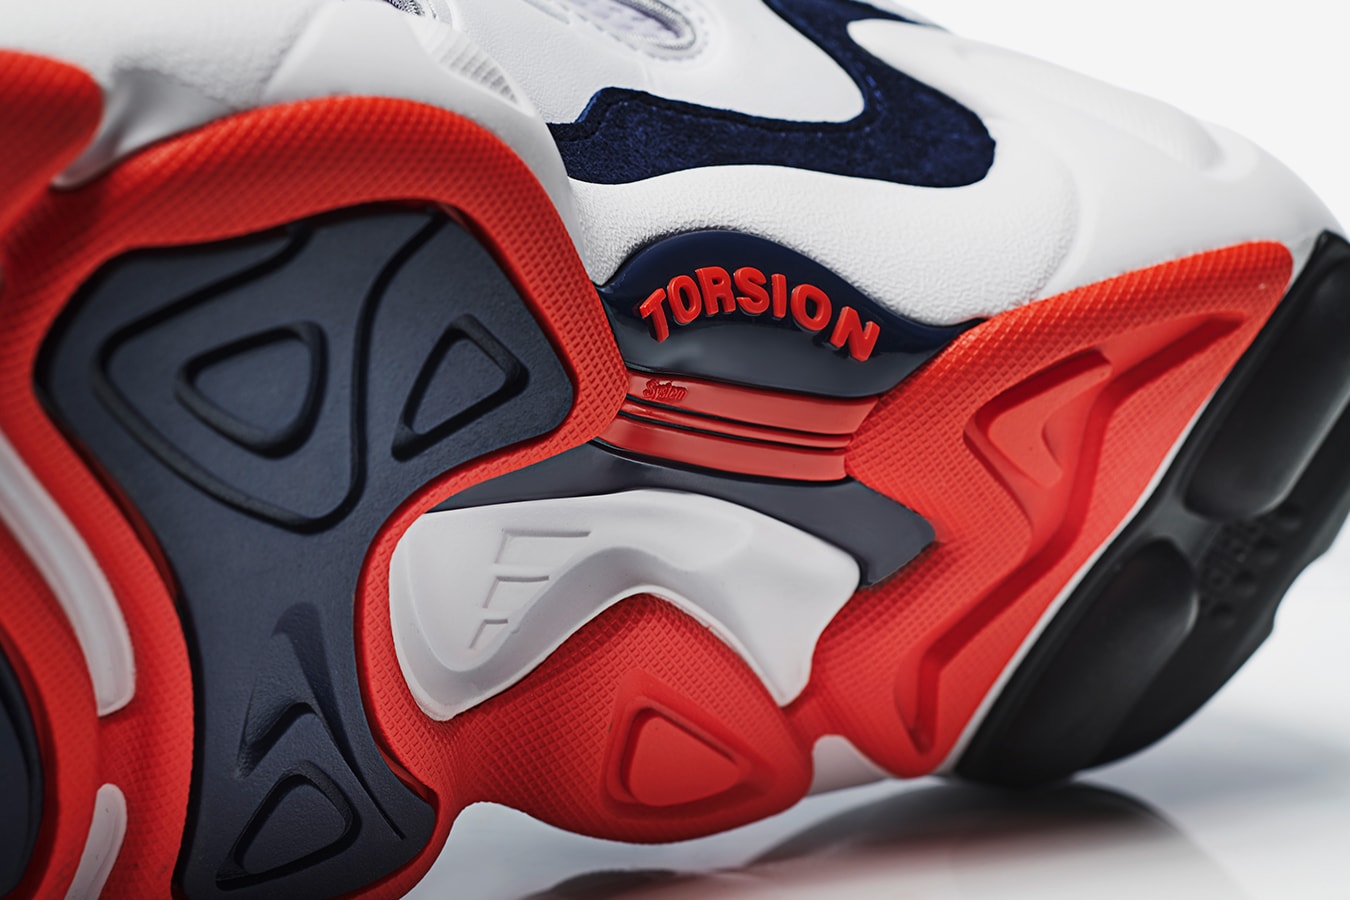 adidas Consortium FYW S-97 torsion sneaker release footwear sneakers shoes kicks 